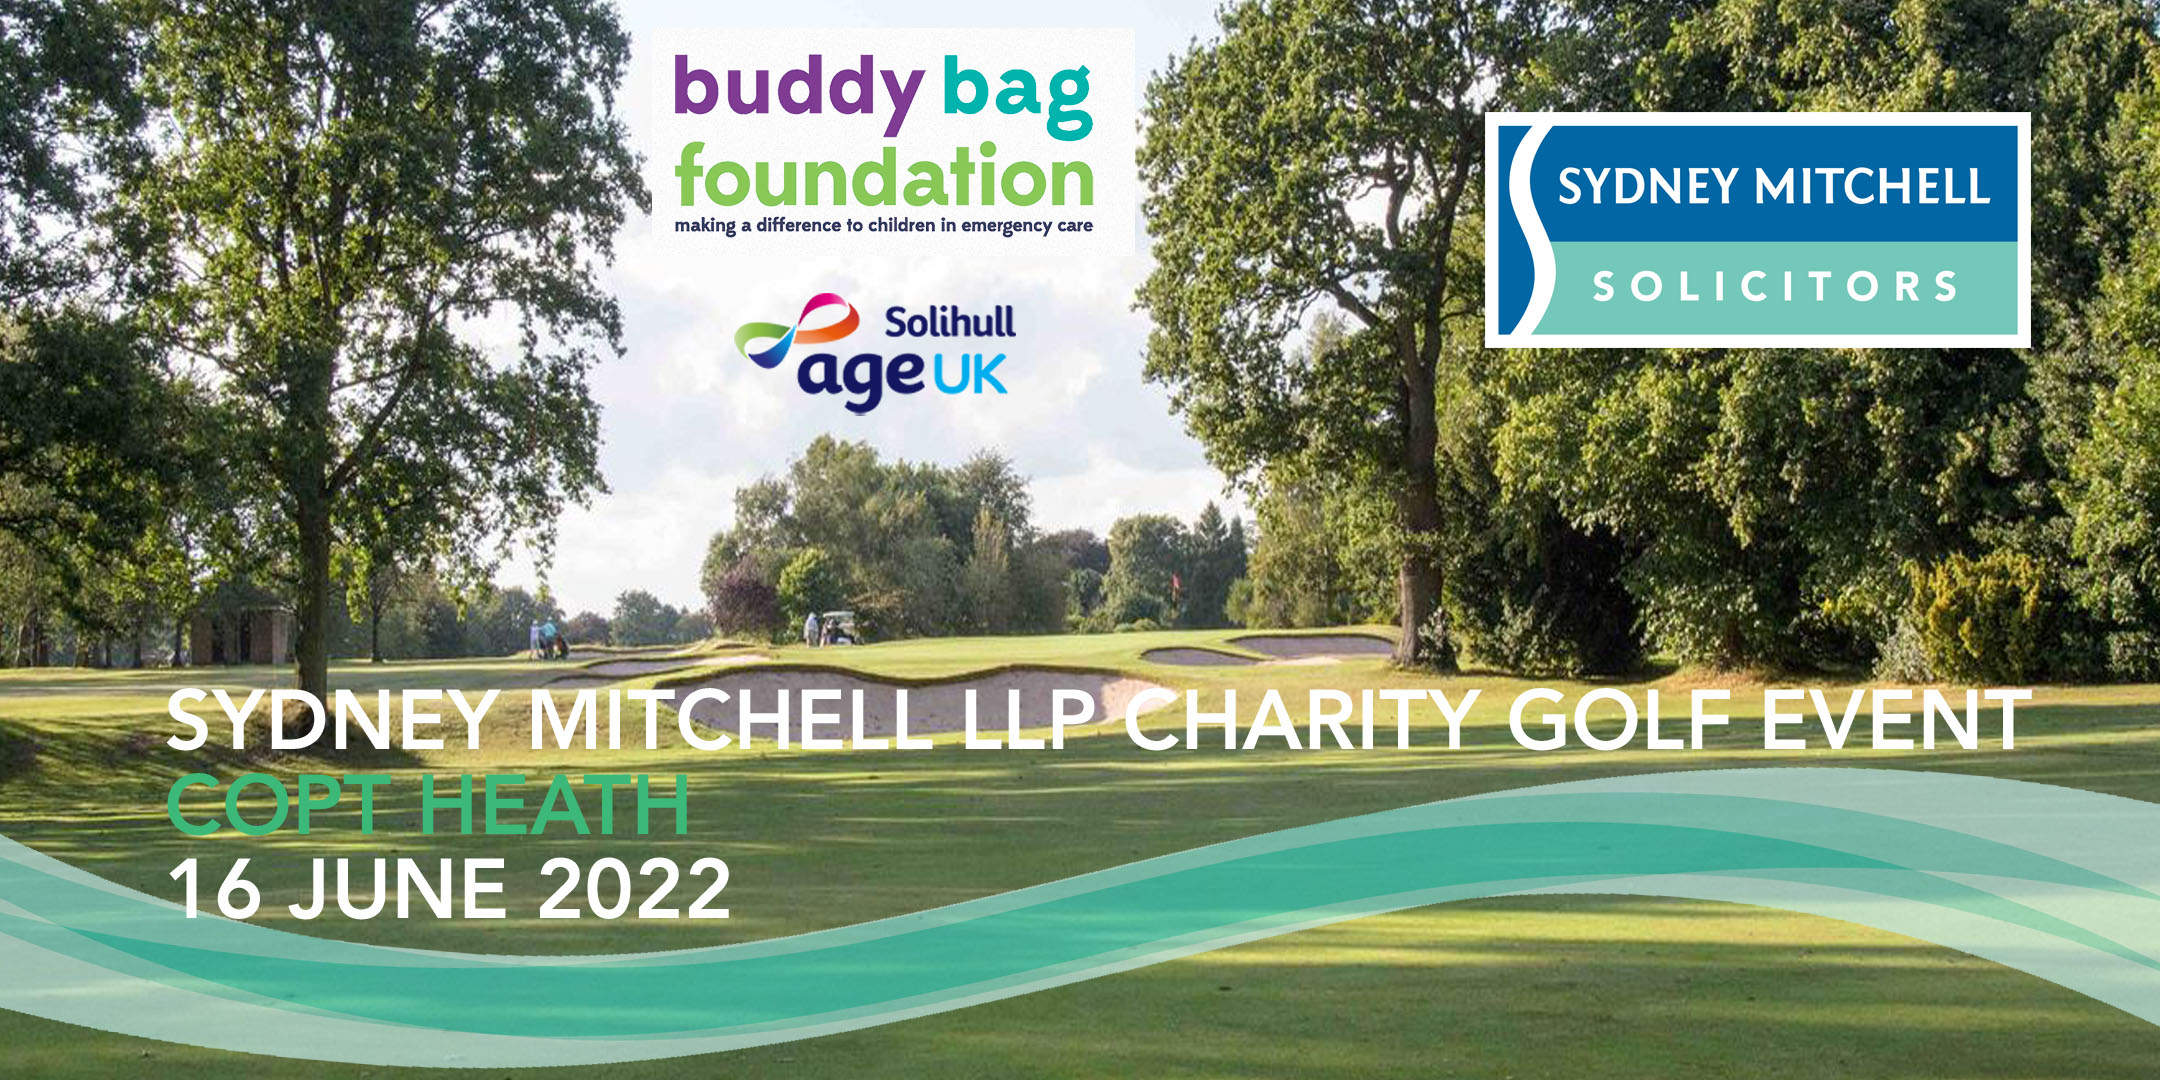 Sydney Mitchell Golf Event 16 June 2022